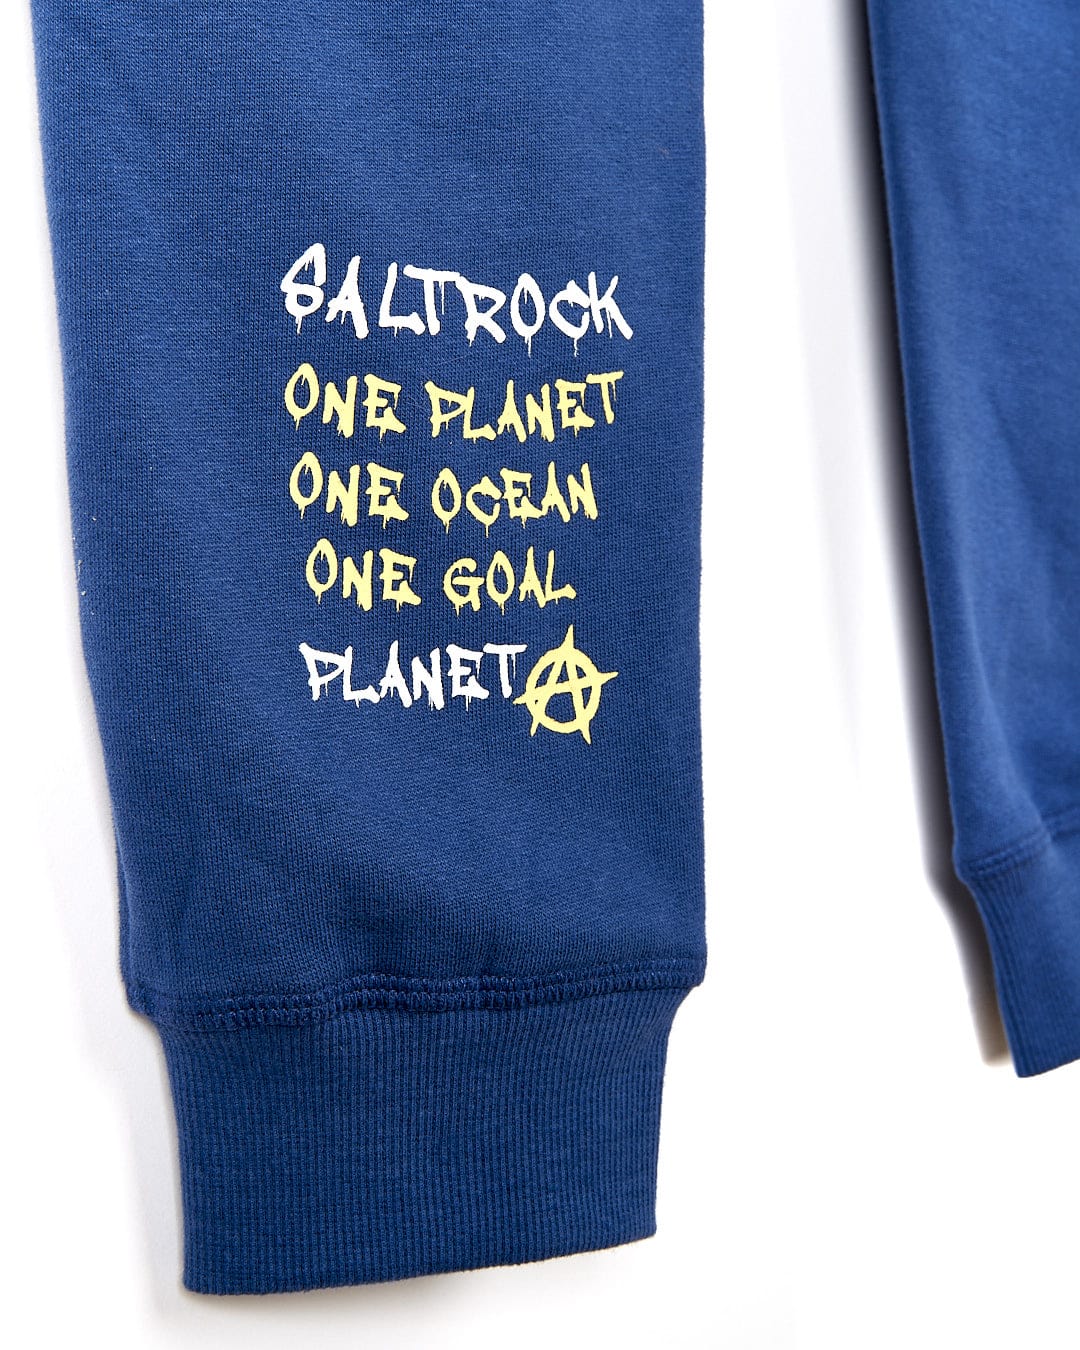 A Saltrock Activist A - Kids Jogger - Dark Blue sweatshirt that says one planet, one soul, one planet.